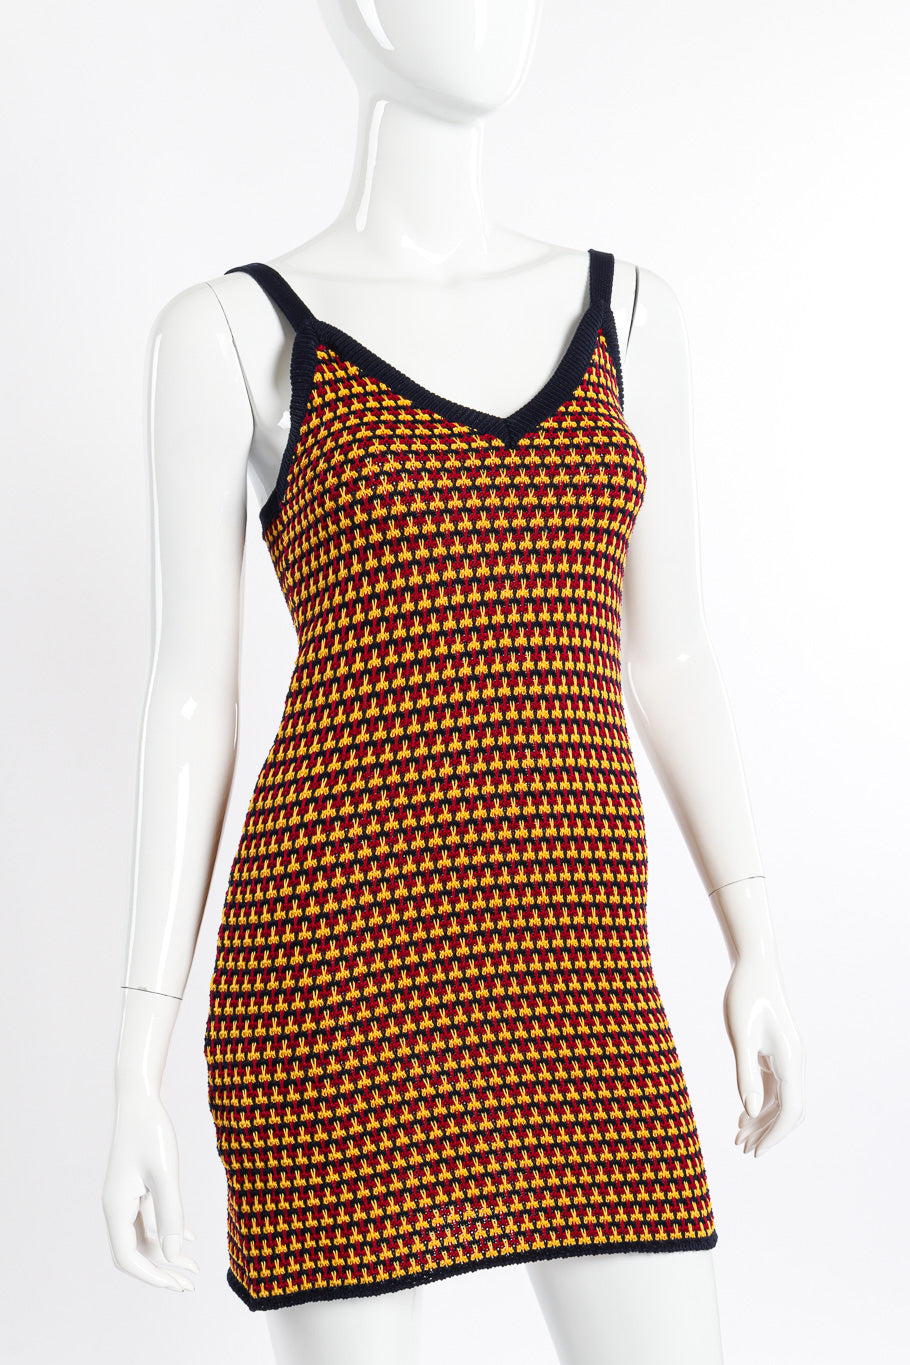 Miu Miu Scissor Knit Tank Dress front view on mannequin closeup @Recessla